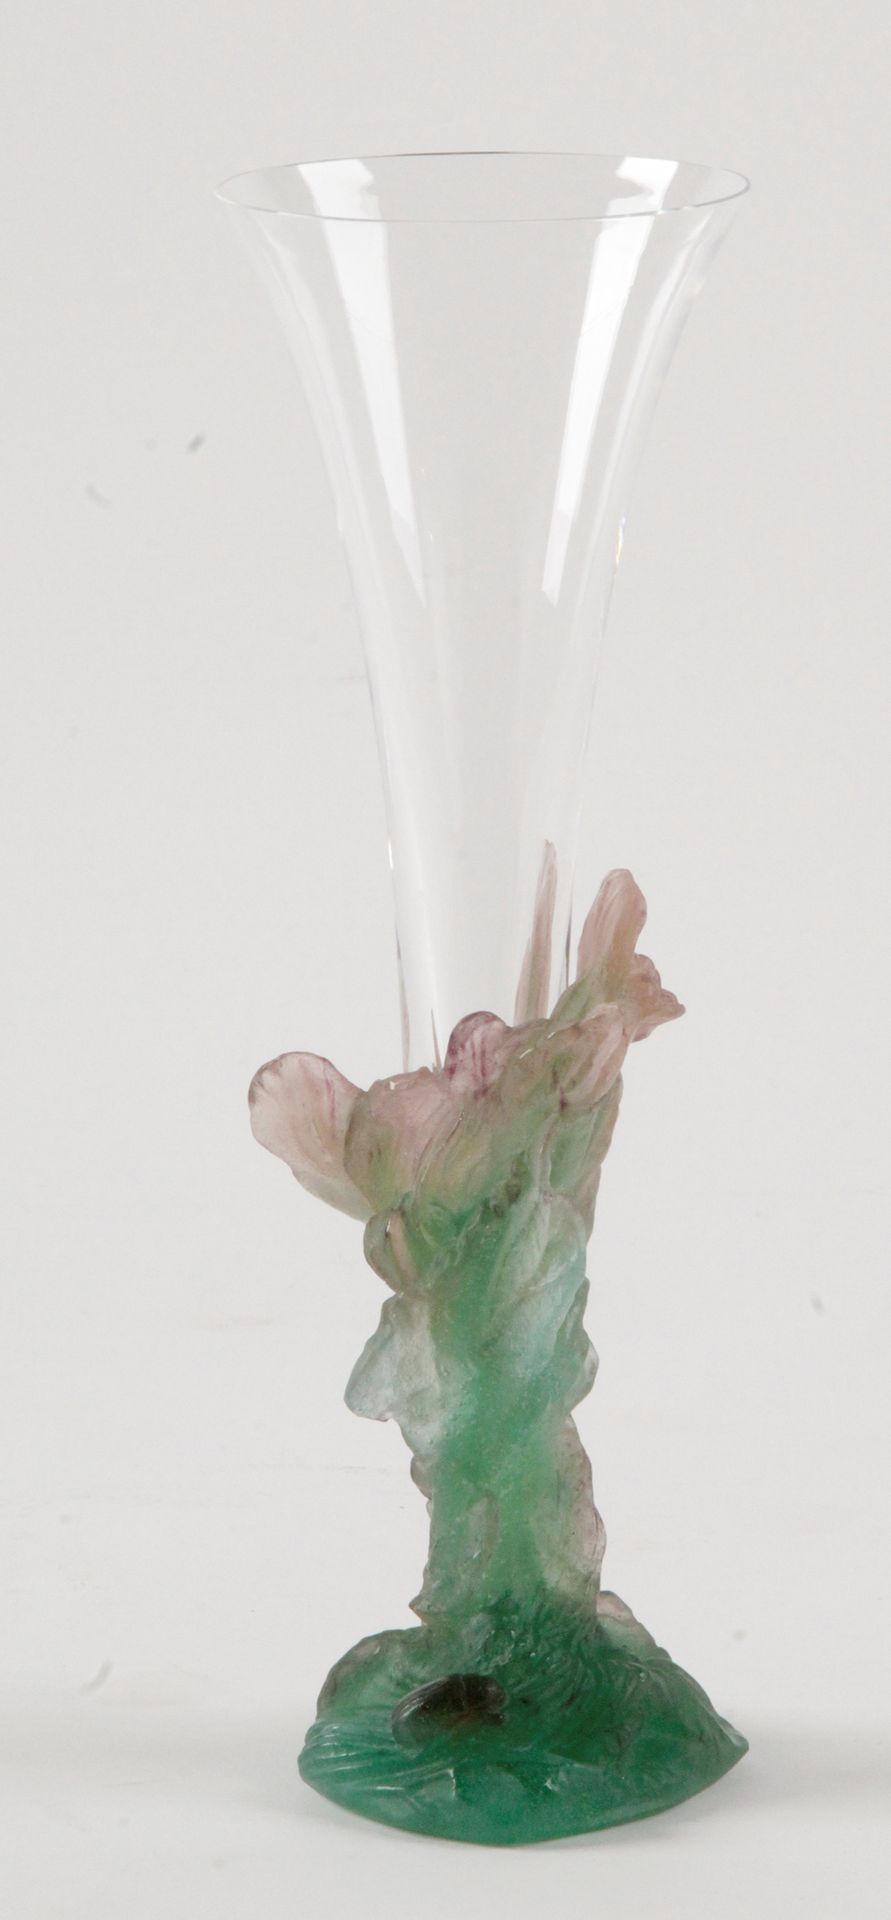 Null DAUM FRANCE水晶和玻璃糊状 "自然 "花瓶，有叶子和甲虫装饰 

H.34.5厘米